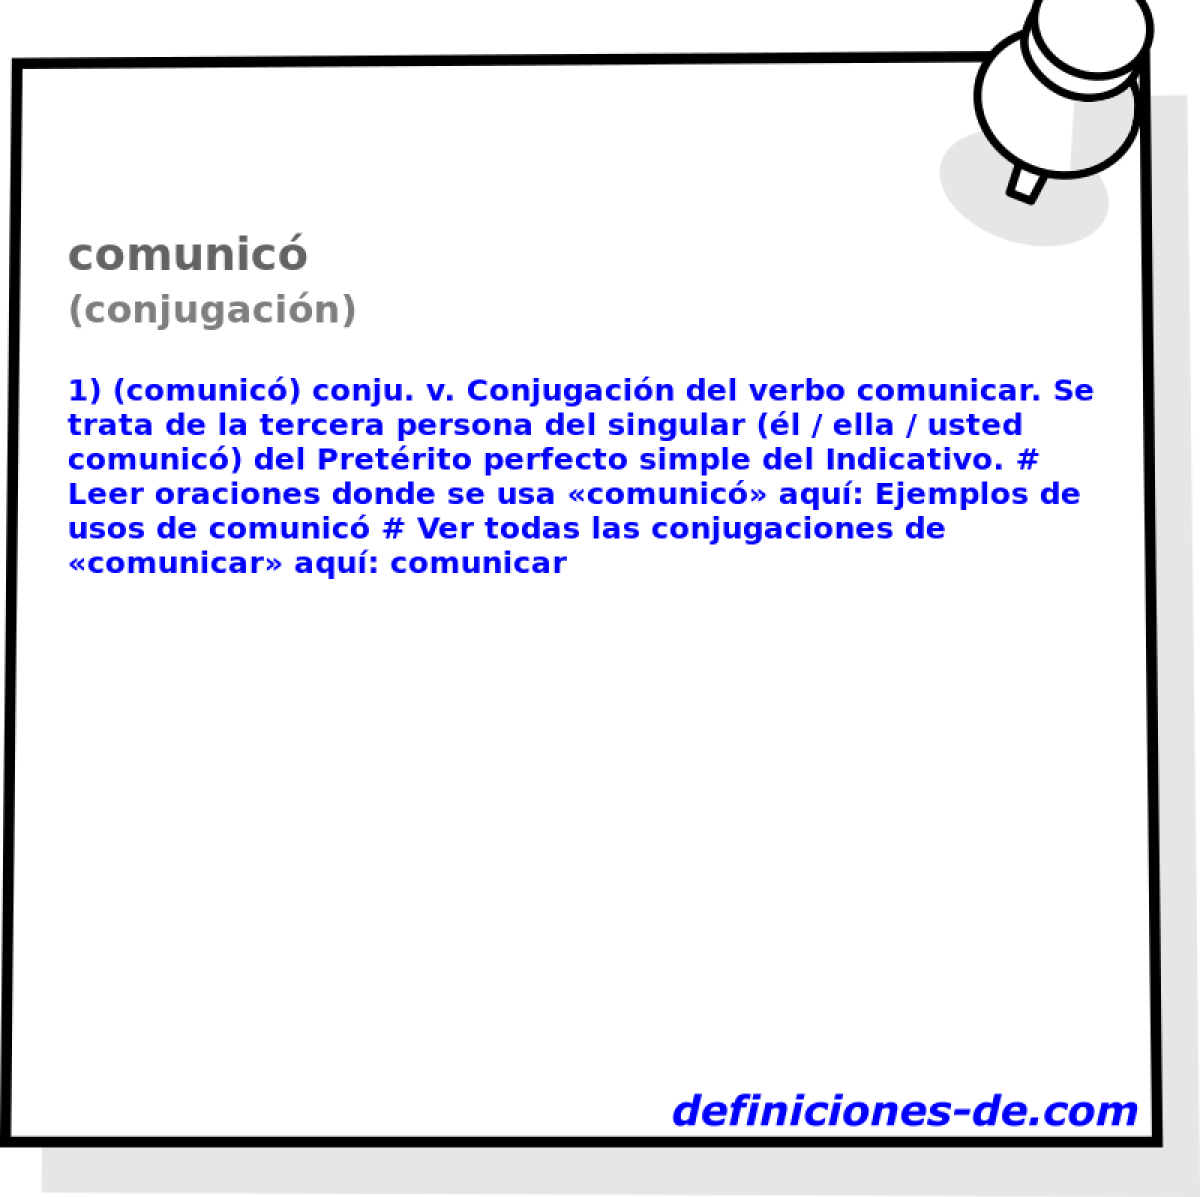 comunic (conjugacin)